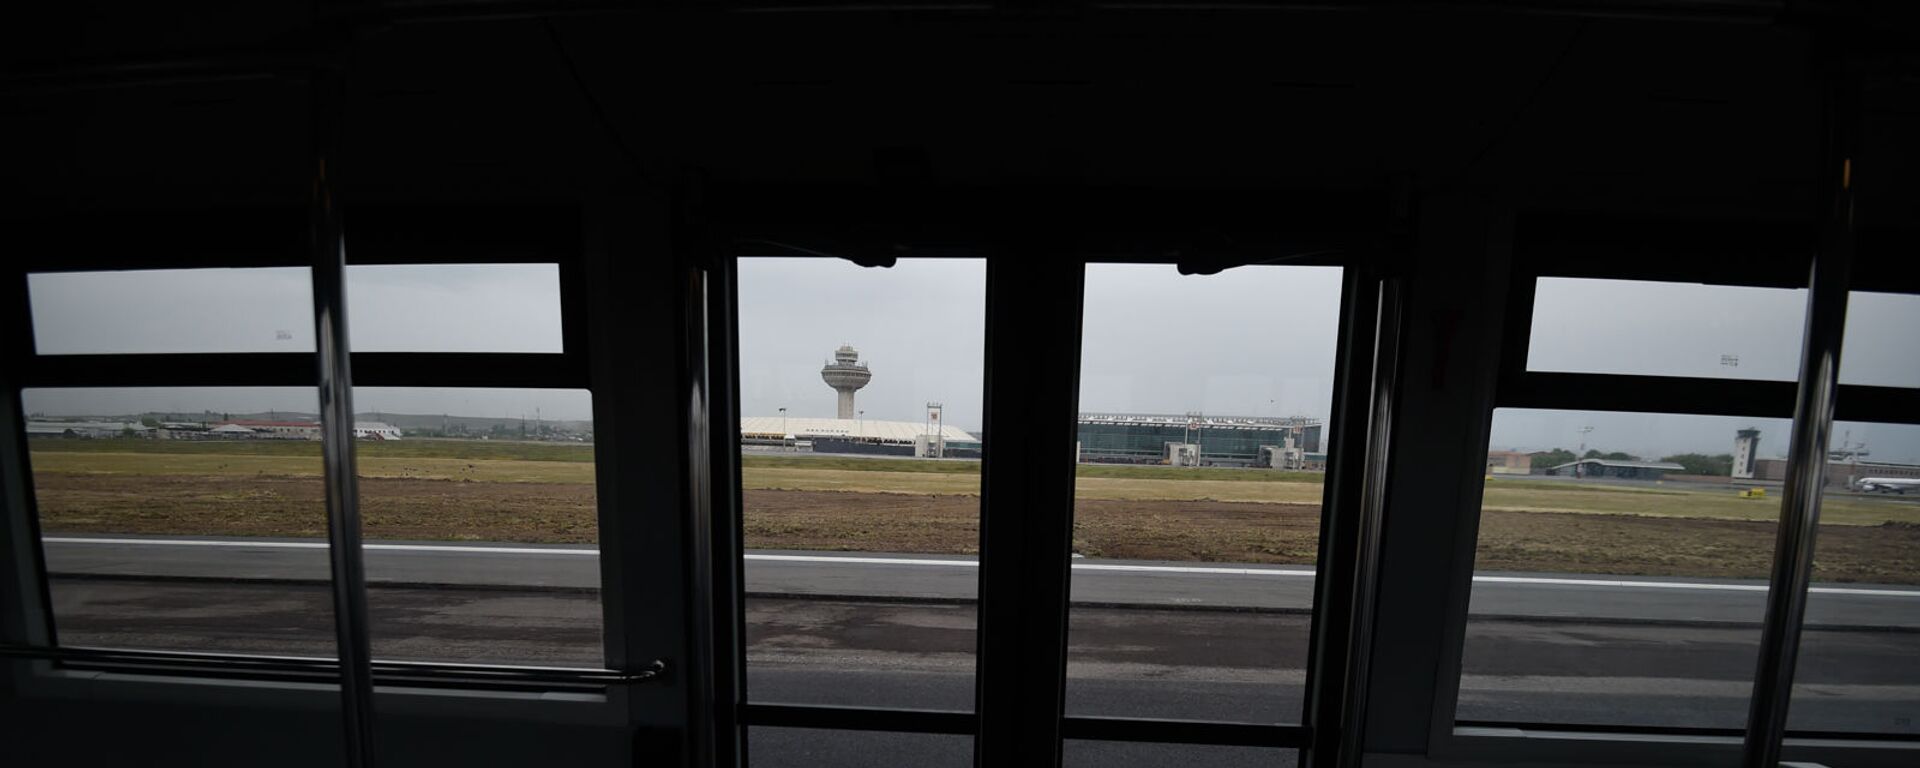 Аэропорт Звартноц через двери шаттла (7 мая 2019). Ереван - Sputnik Армения, 1920, 27.01.2021